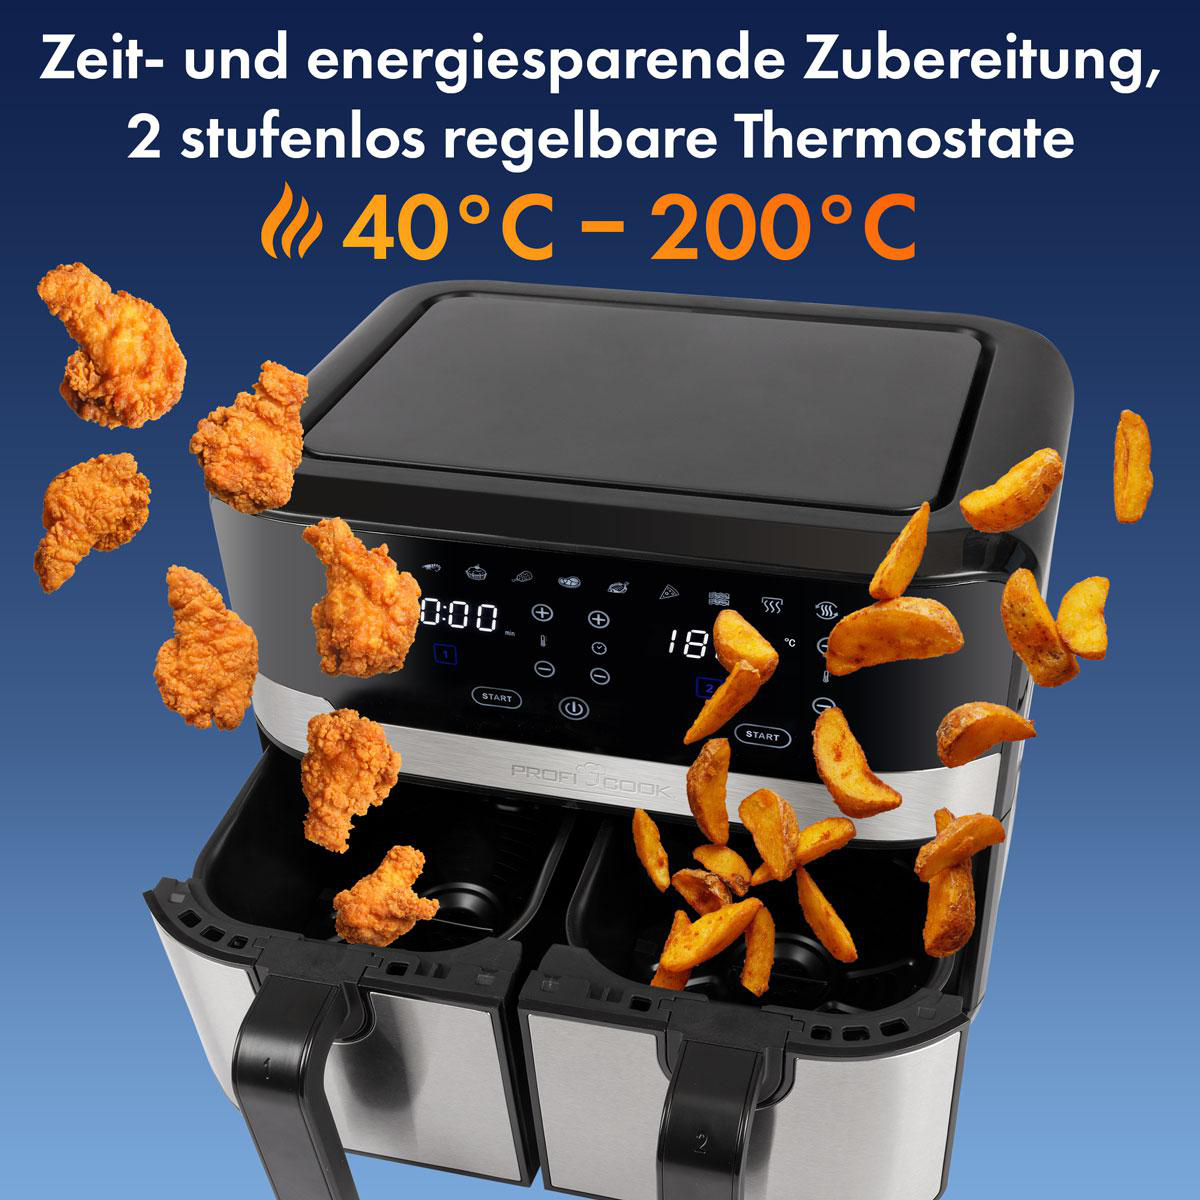 PC-FR 1242 PROFICOOK Schwarz/Edelstahl Watt H 2400 Heißluftfritteuse